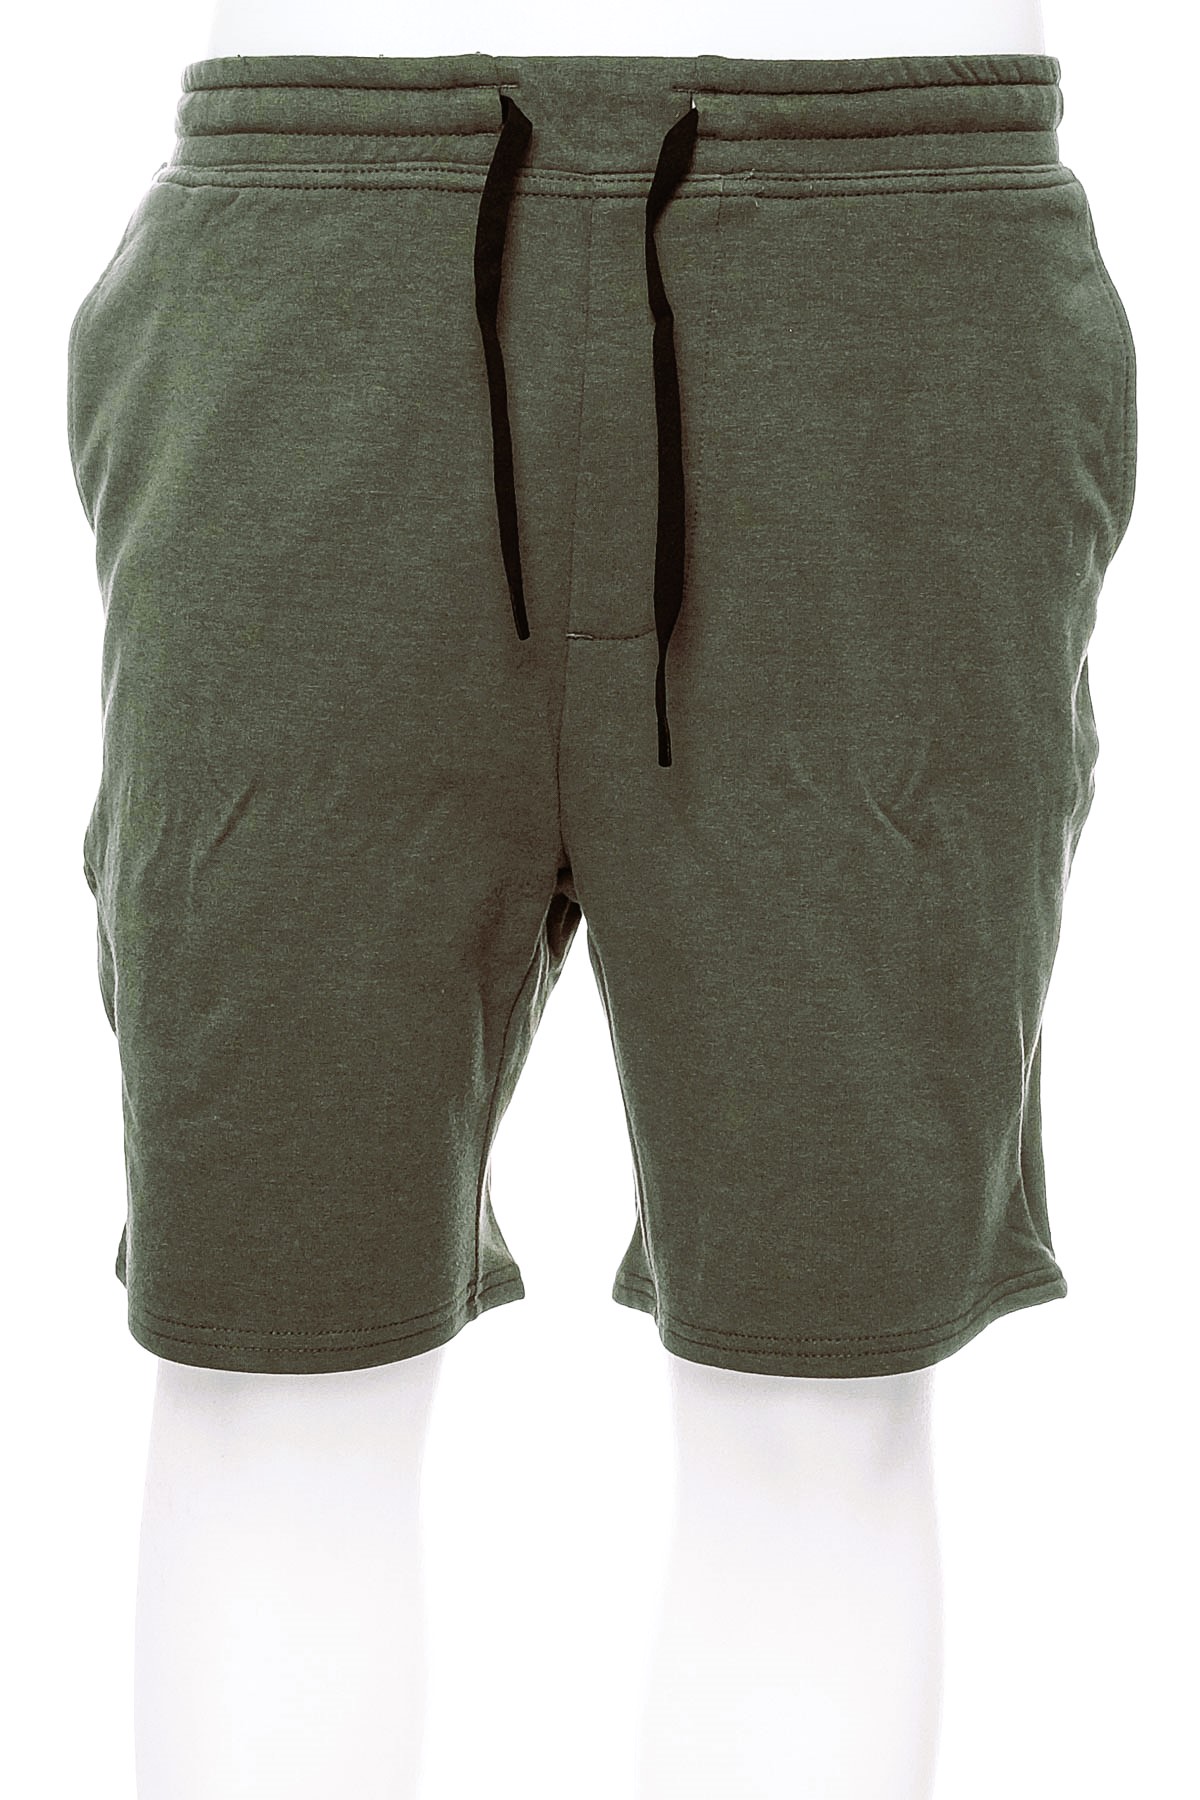 Men's shorts - Stance - 0